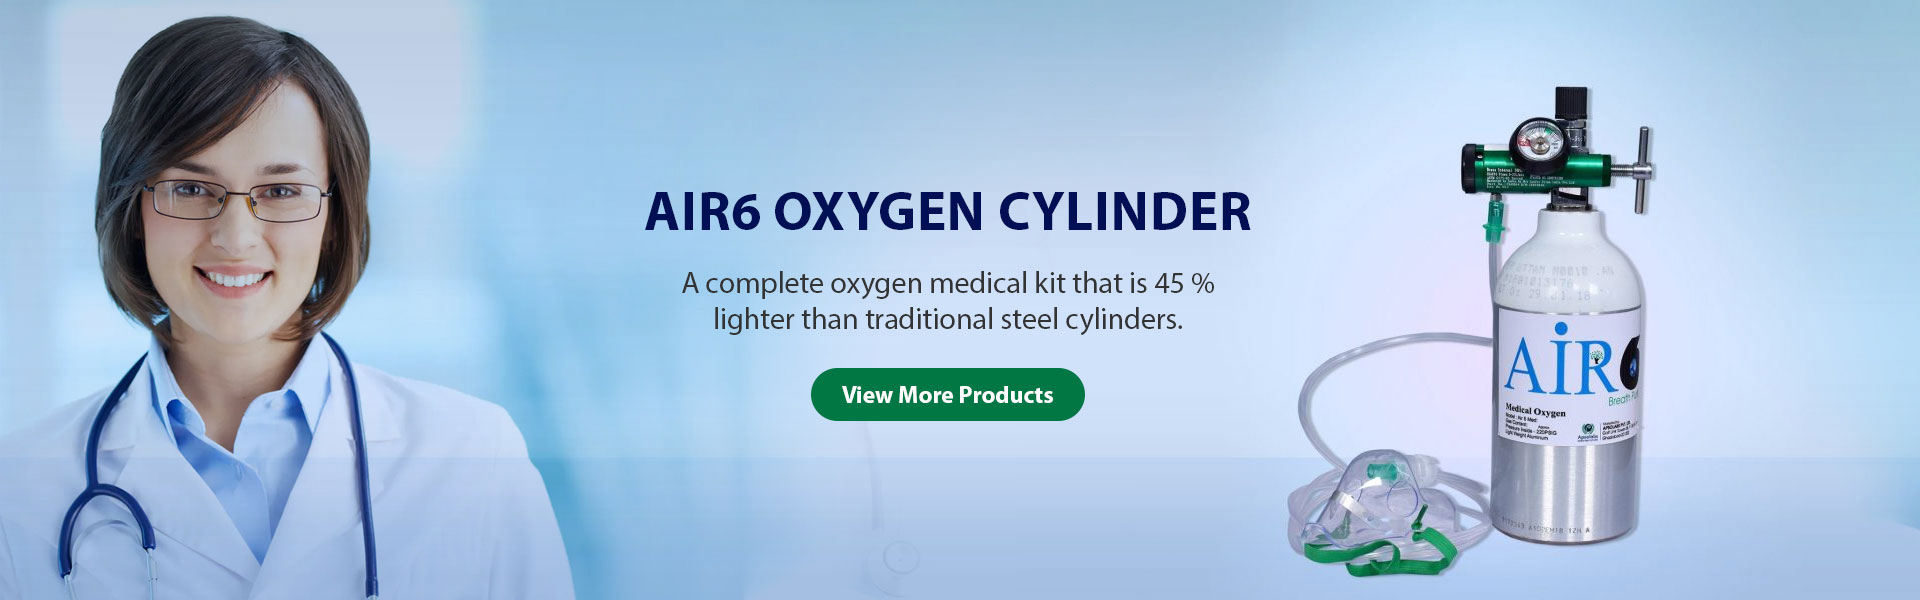  Air6 Oxygen Cylinder Manufacturers in Kanpur